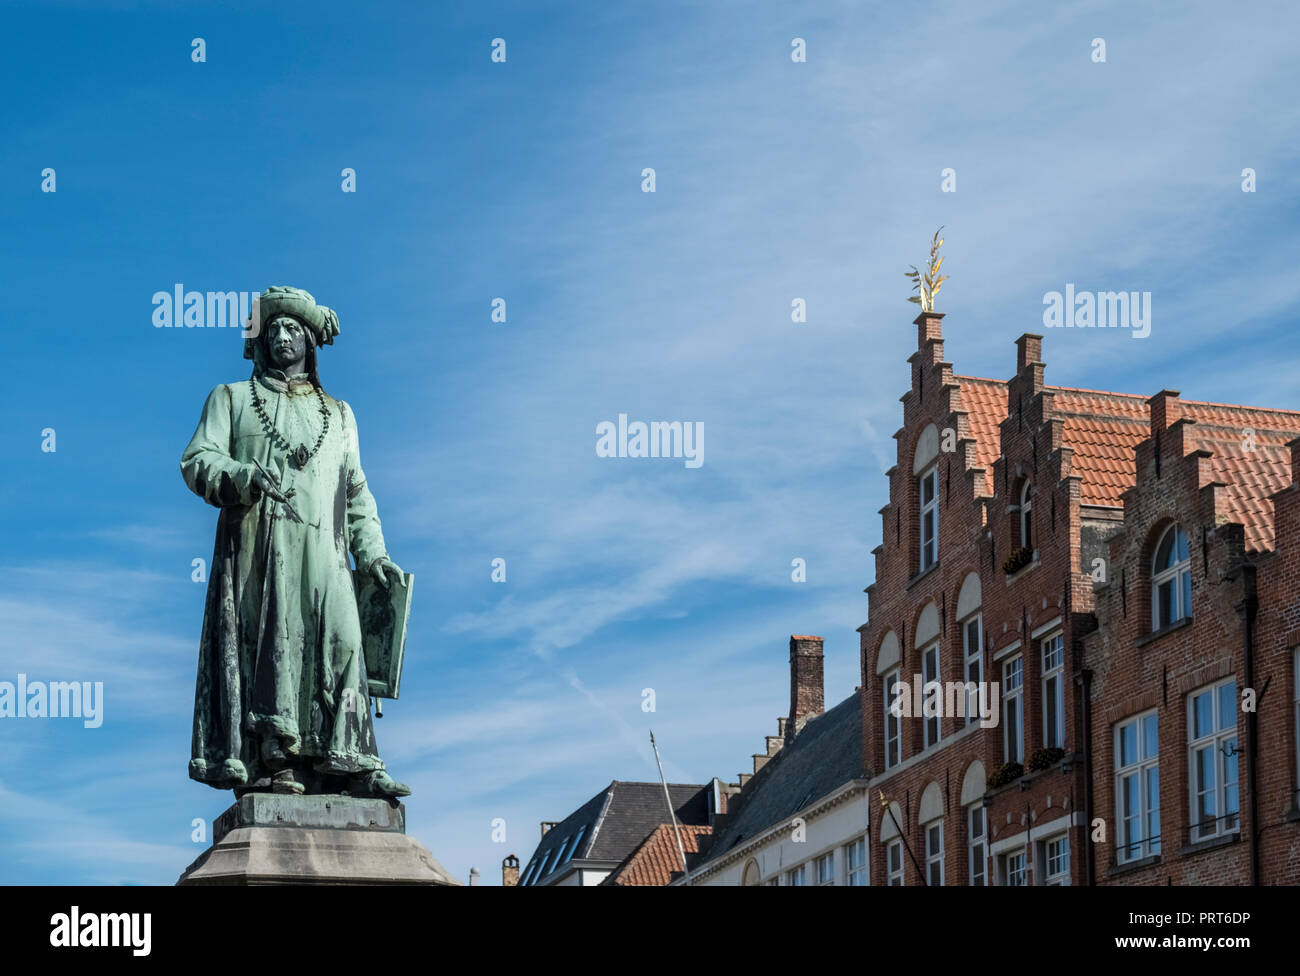 Statue and memorial for Bruges painter Jan van Eyck, located in Jan van Eyck Square, Bruges (Brugge), Flanders, Belgium Stock Photo